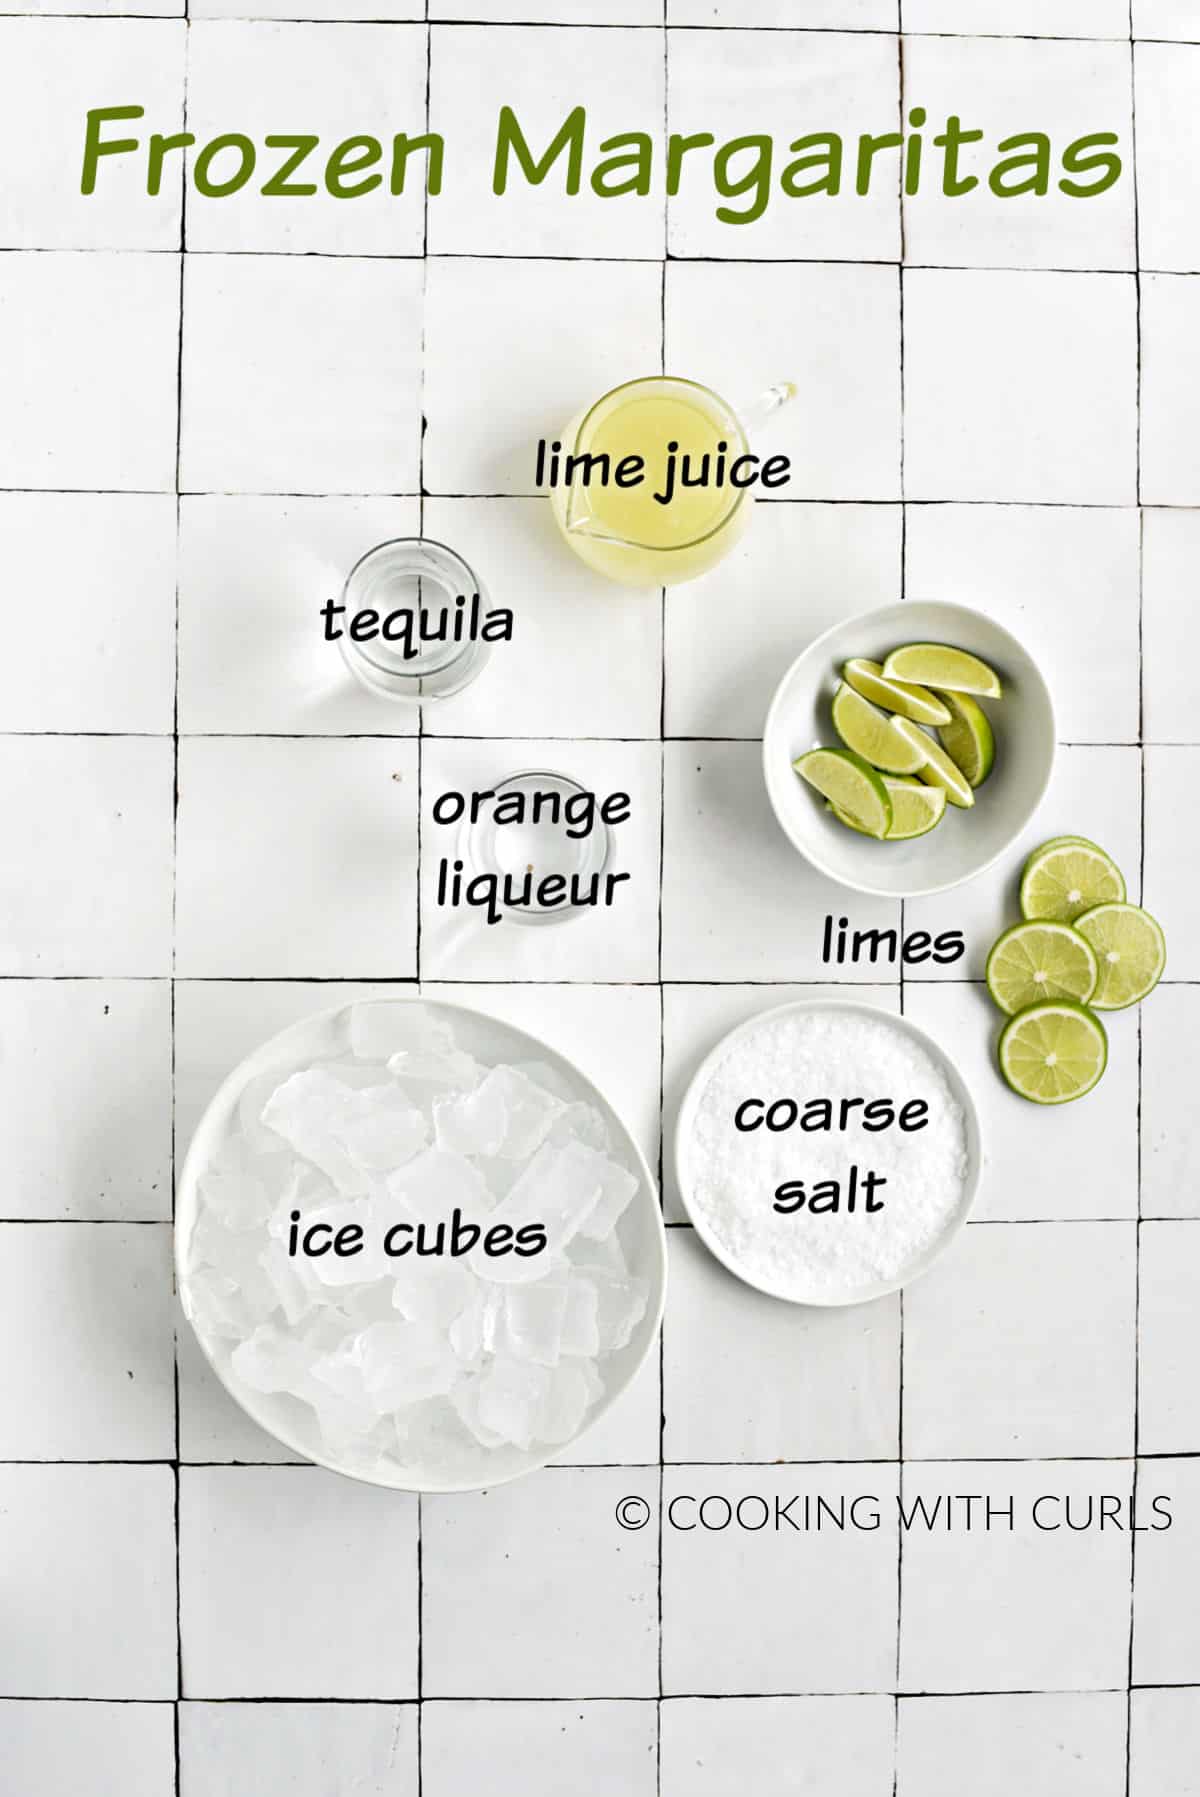 Lime juice, tequila, orange liqueur, lime garnish, coarse salt and ice cubes. 